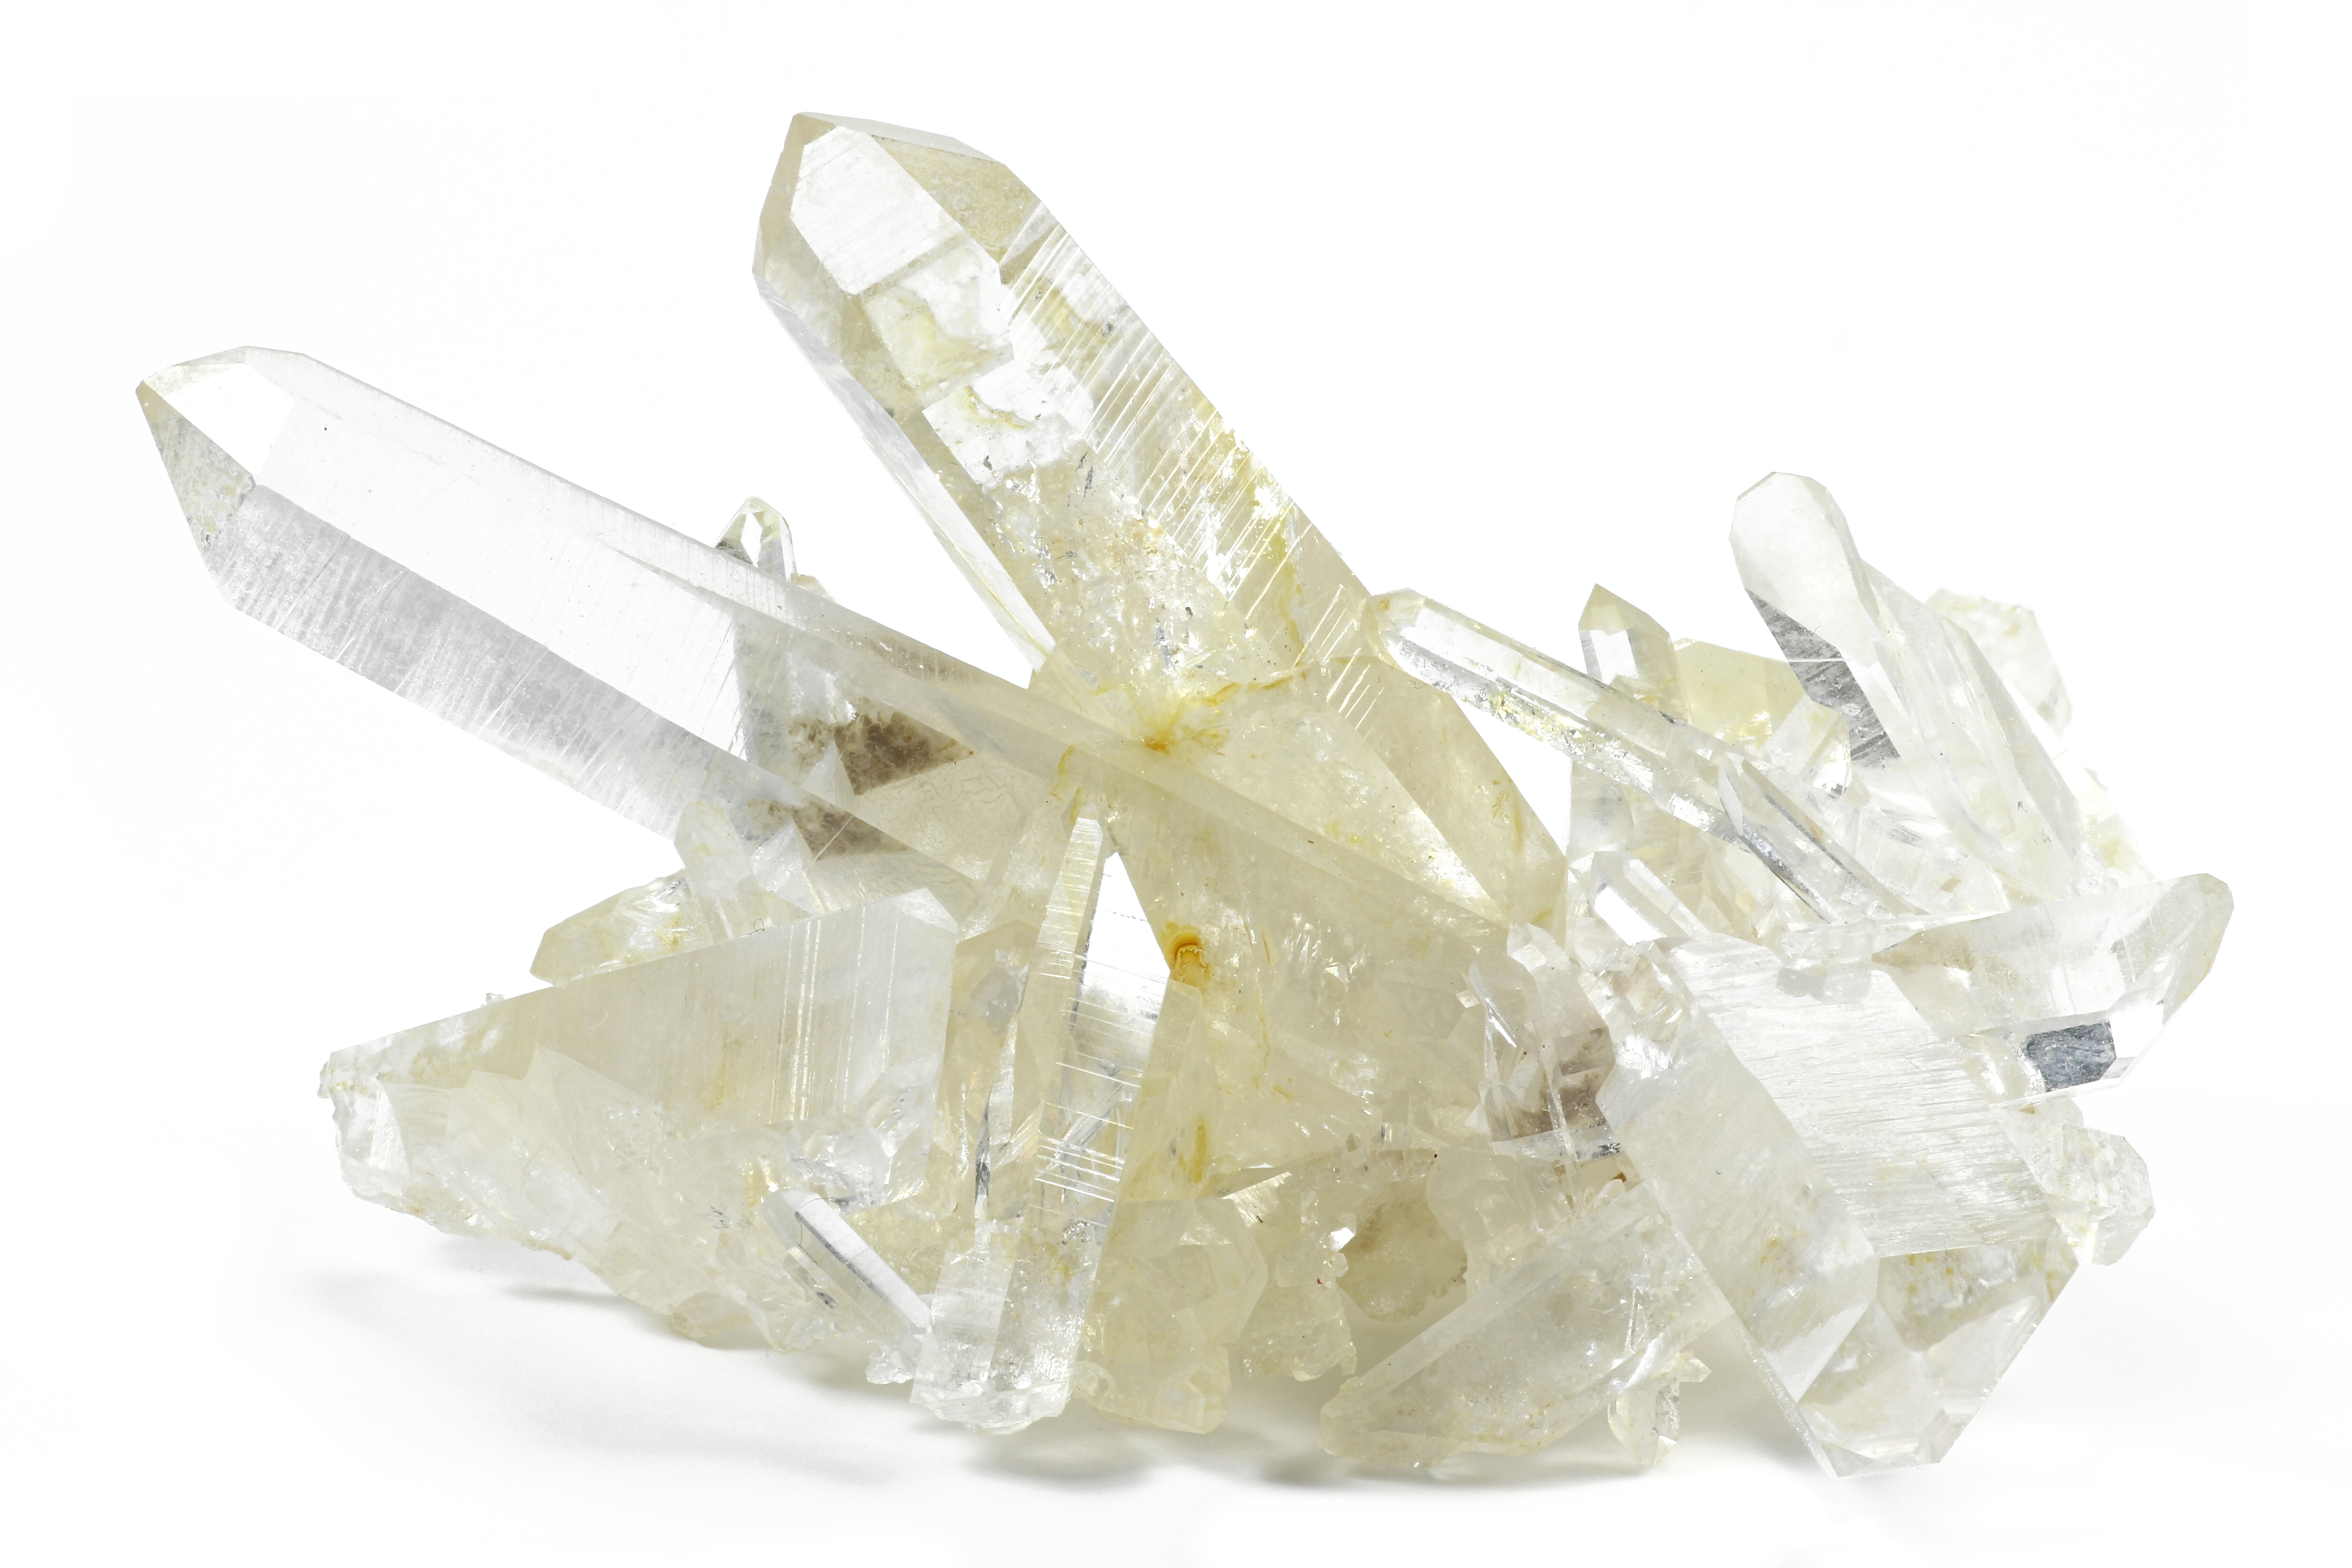 Quartz crystals courtesy of Shutterstock. 